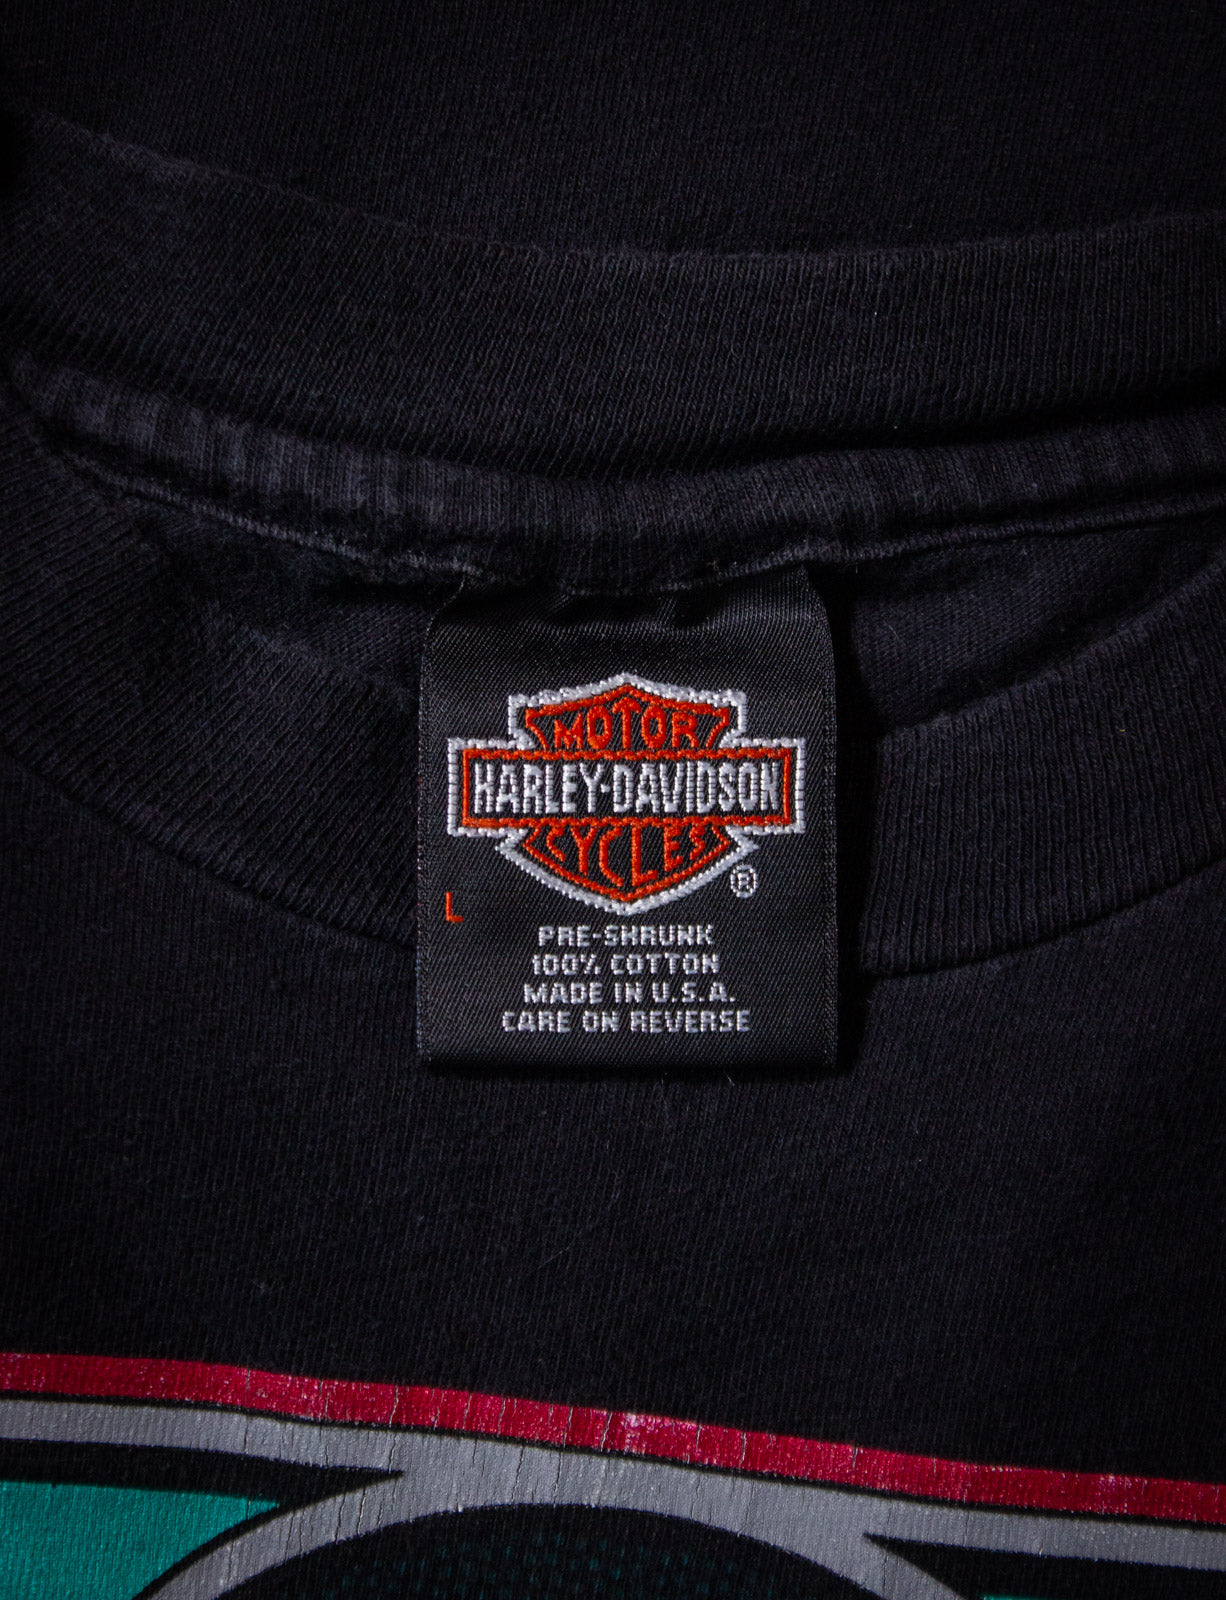 Vintage Harley Davidson Wars London Graphic T Shirt 90s Black Large